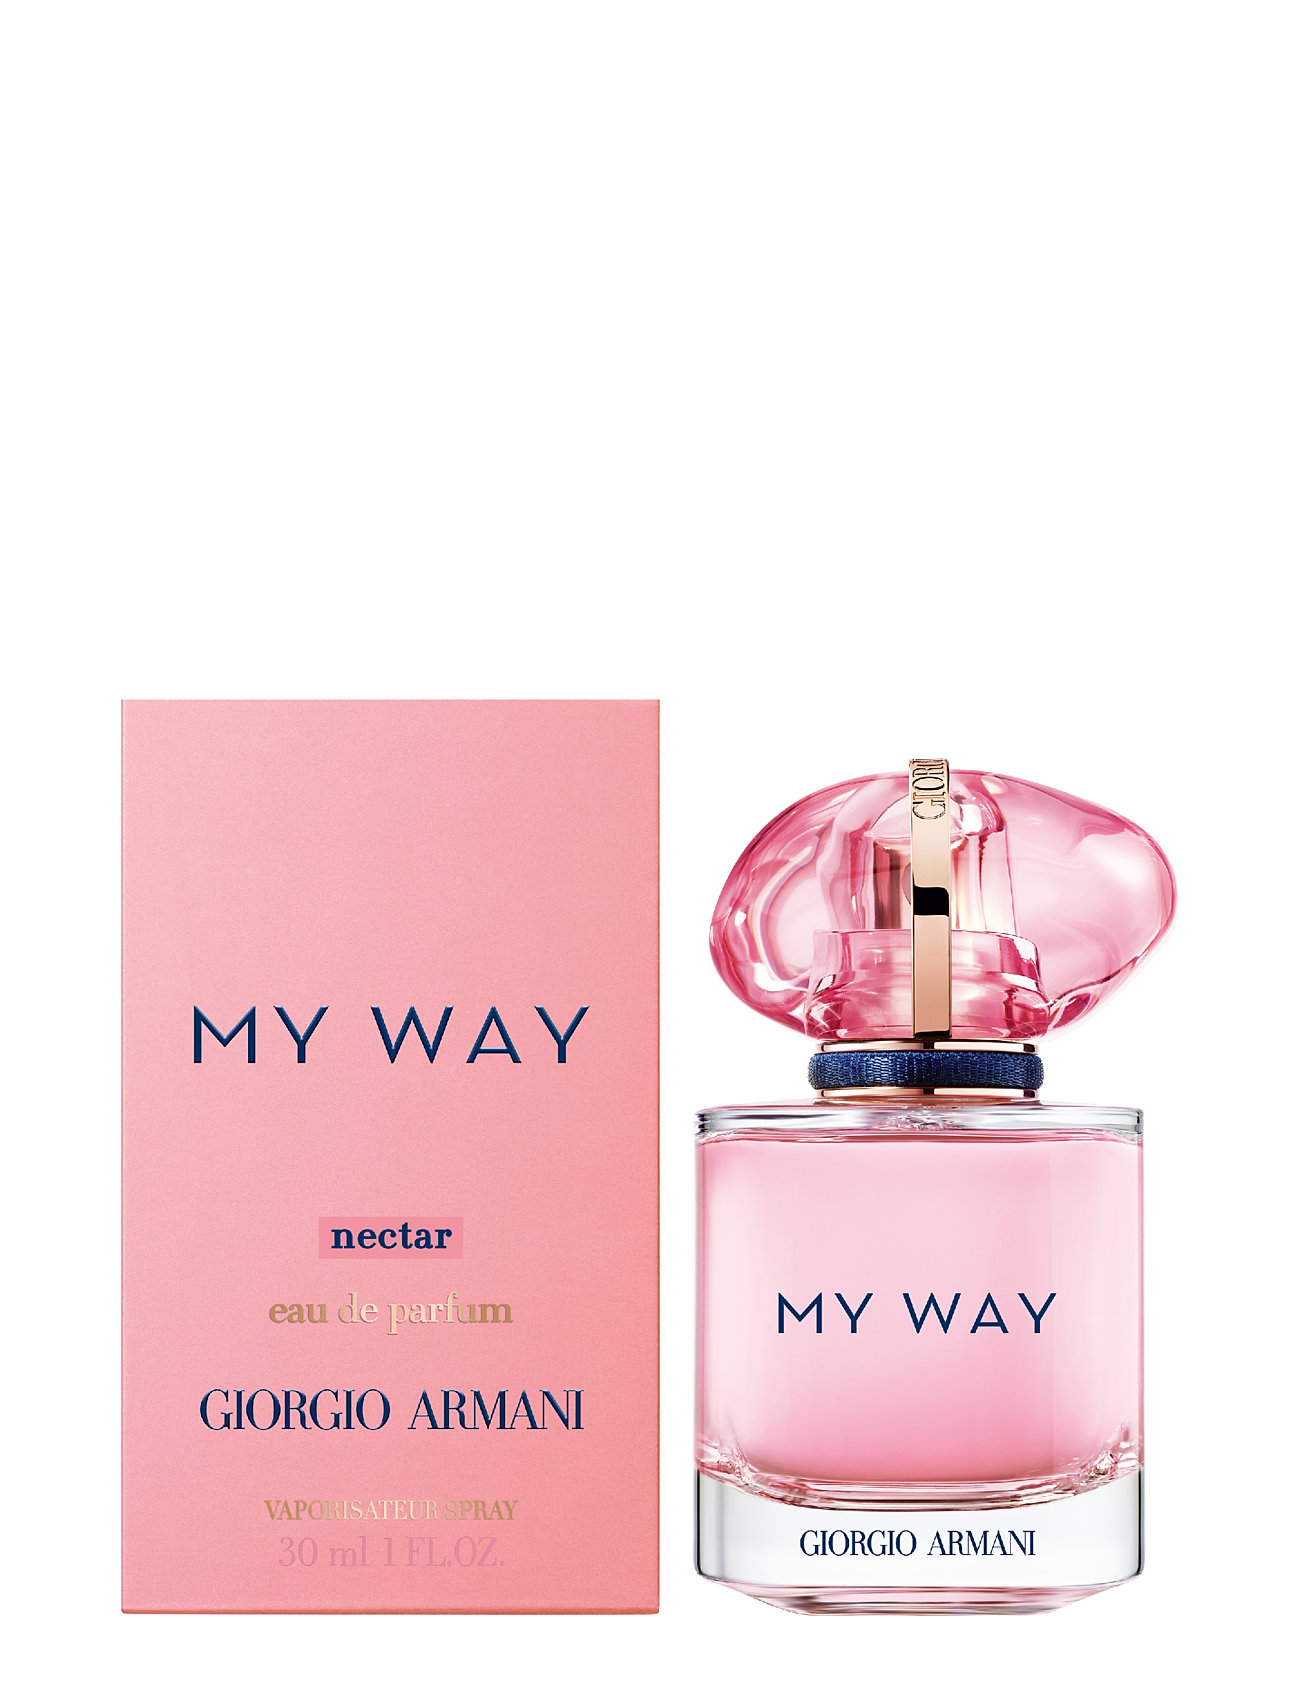 My Way Eau De Parfum Nectar V30Ml Parfume Eau De Parfum Nude Armani